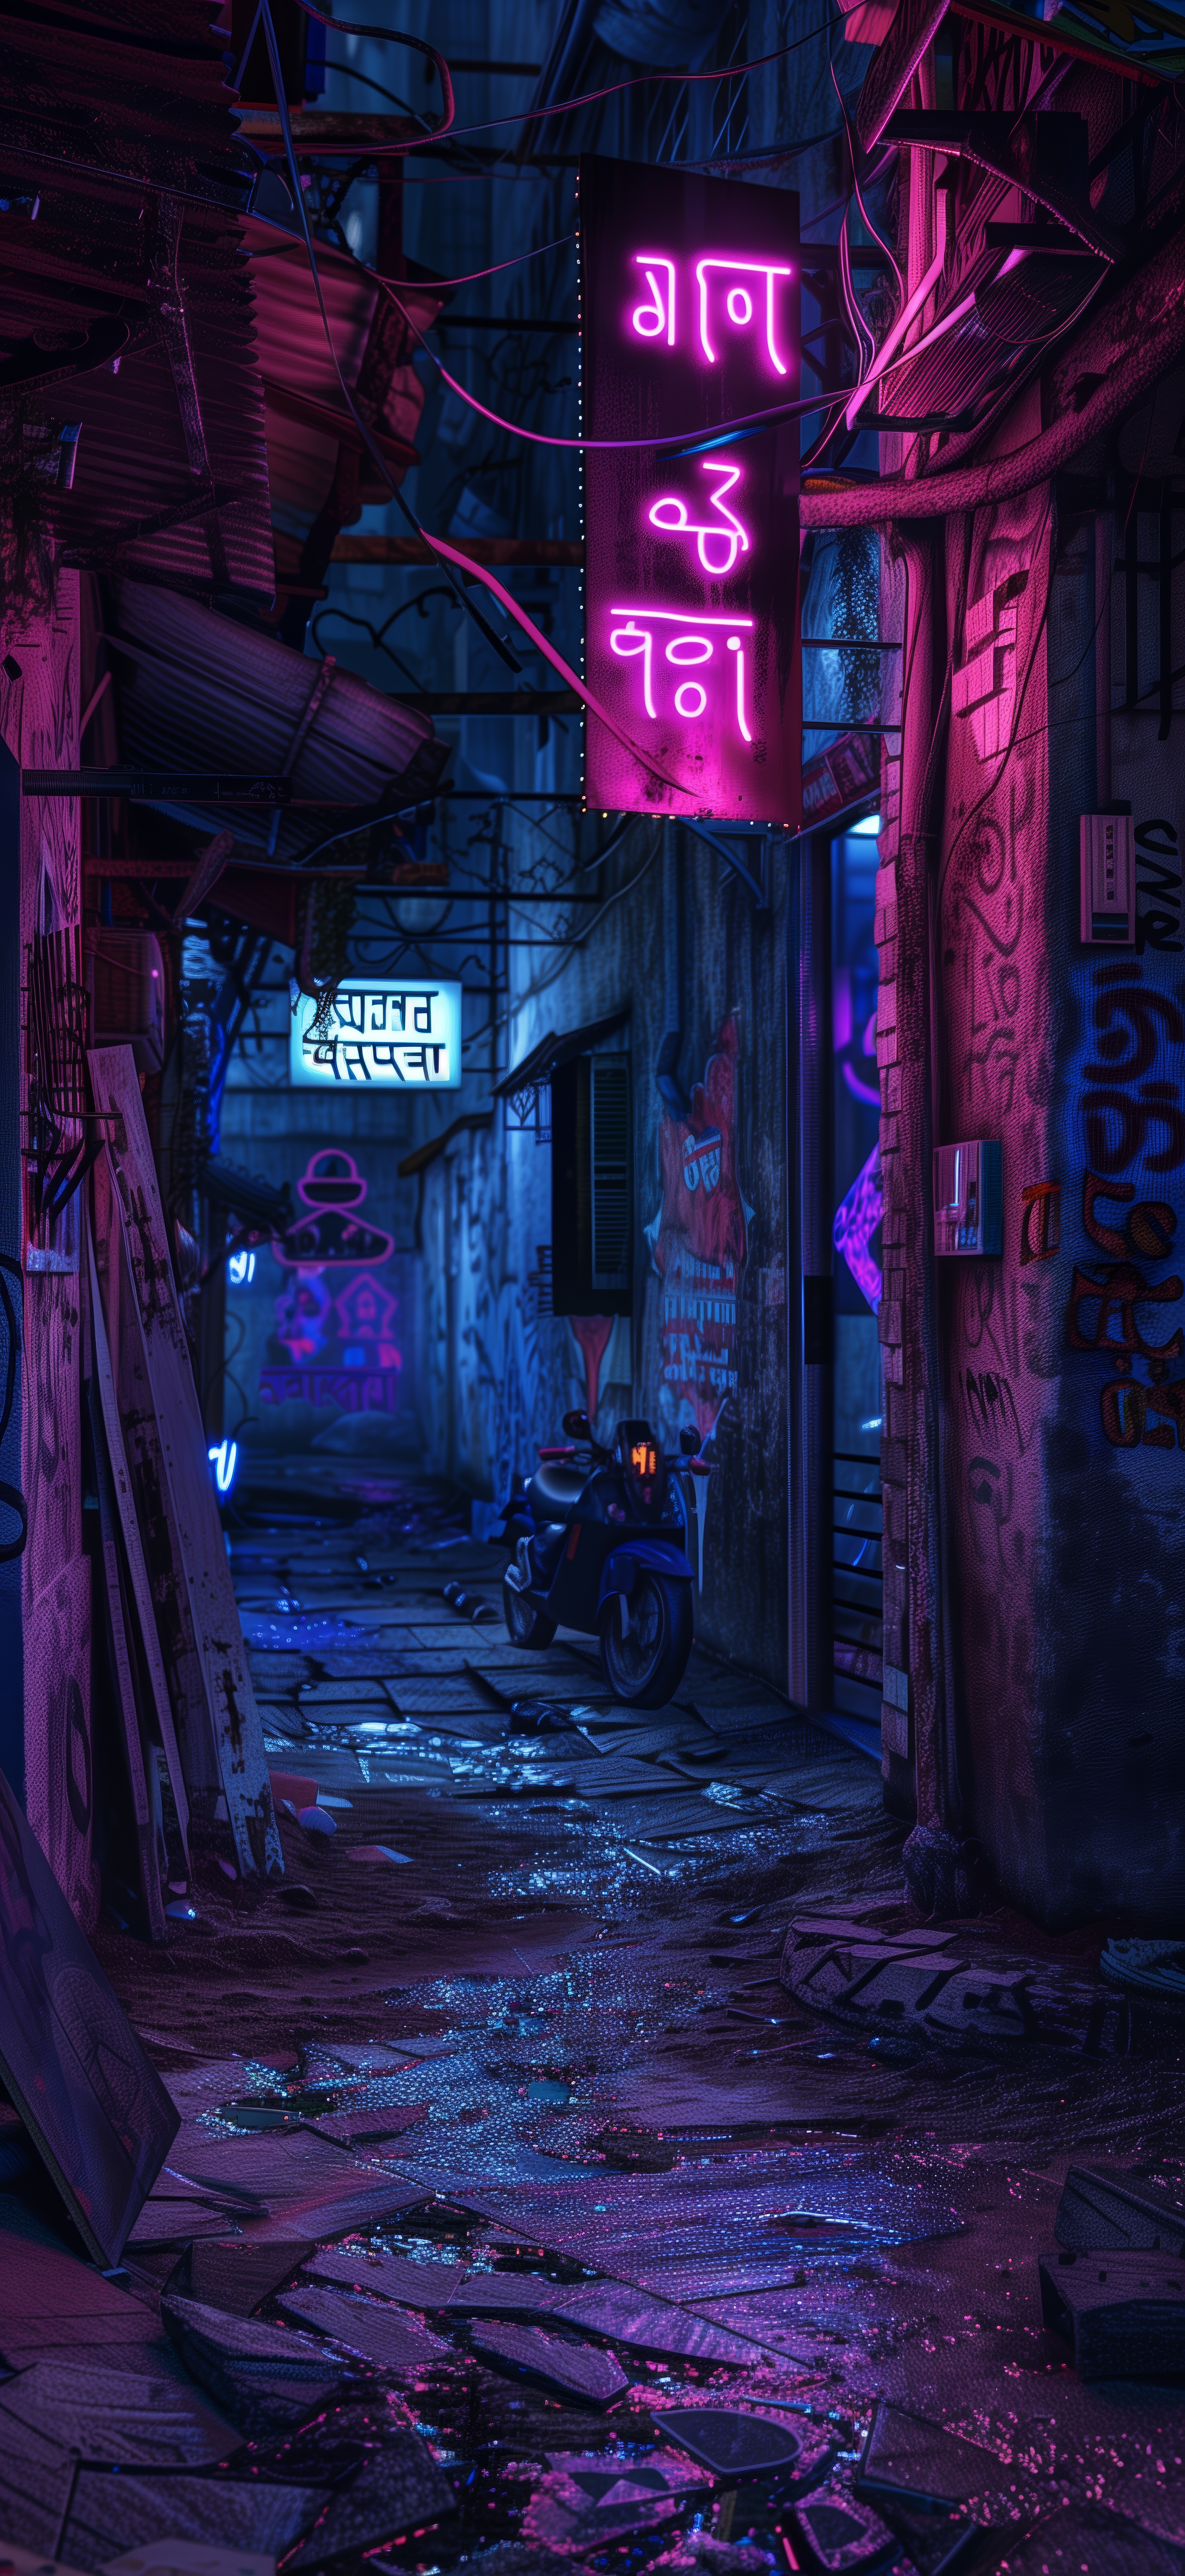 General 2944x6400 AI art portrait display neon cyberpunk Mumbai sign alleyway purple city